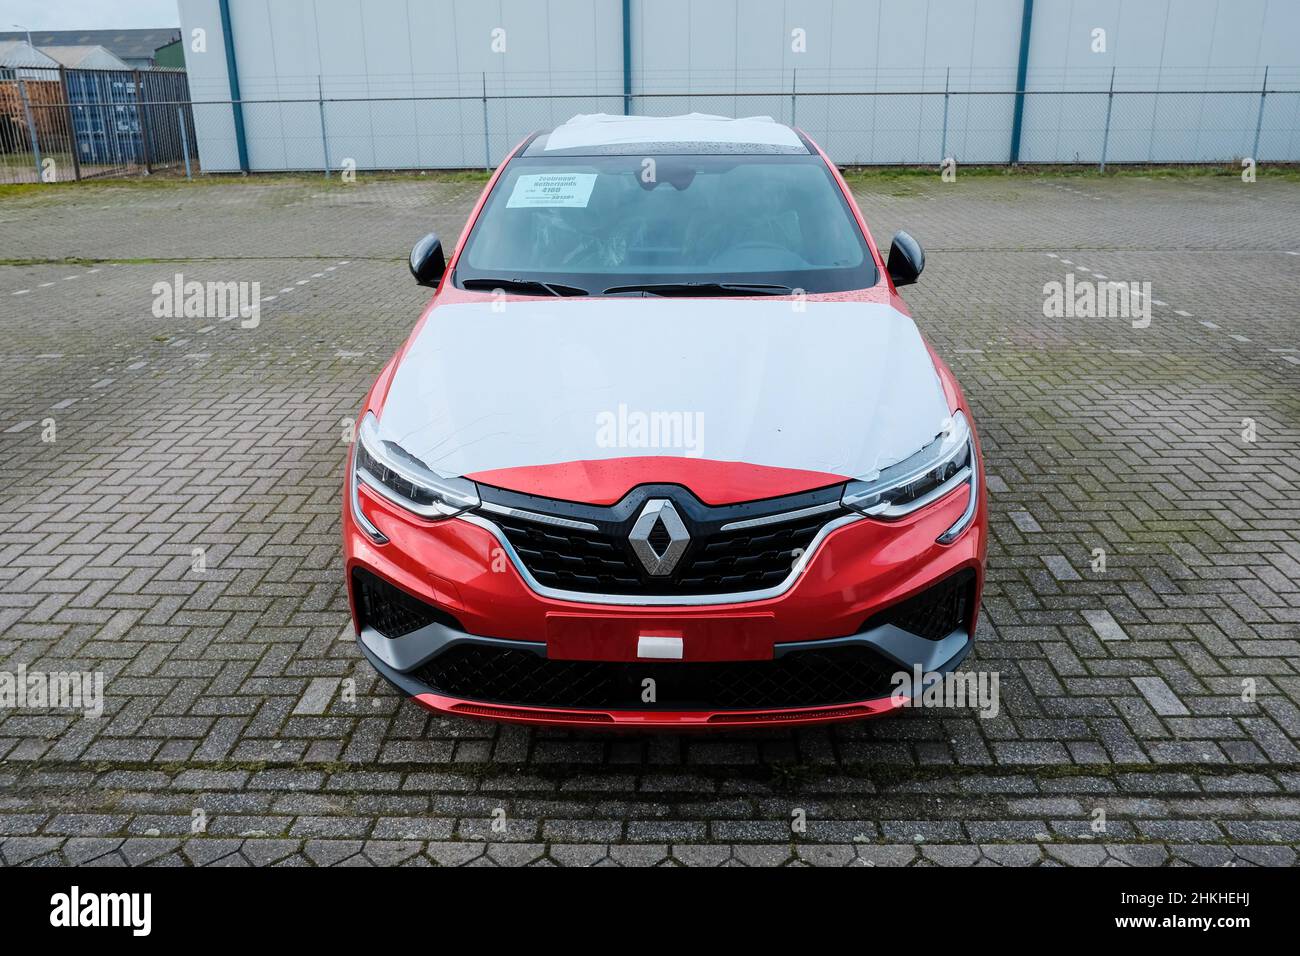 Renault e tech -Fotos und -Bildmaterial in hoher Auflösung – Alamy